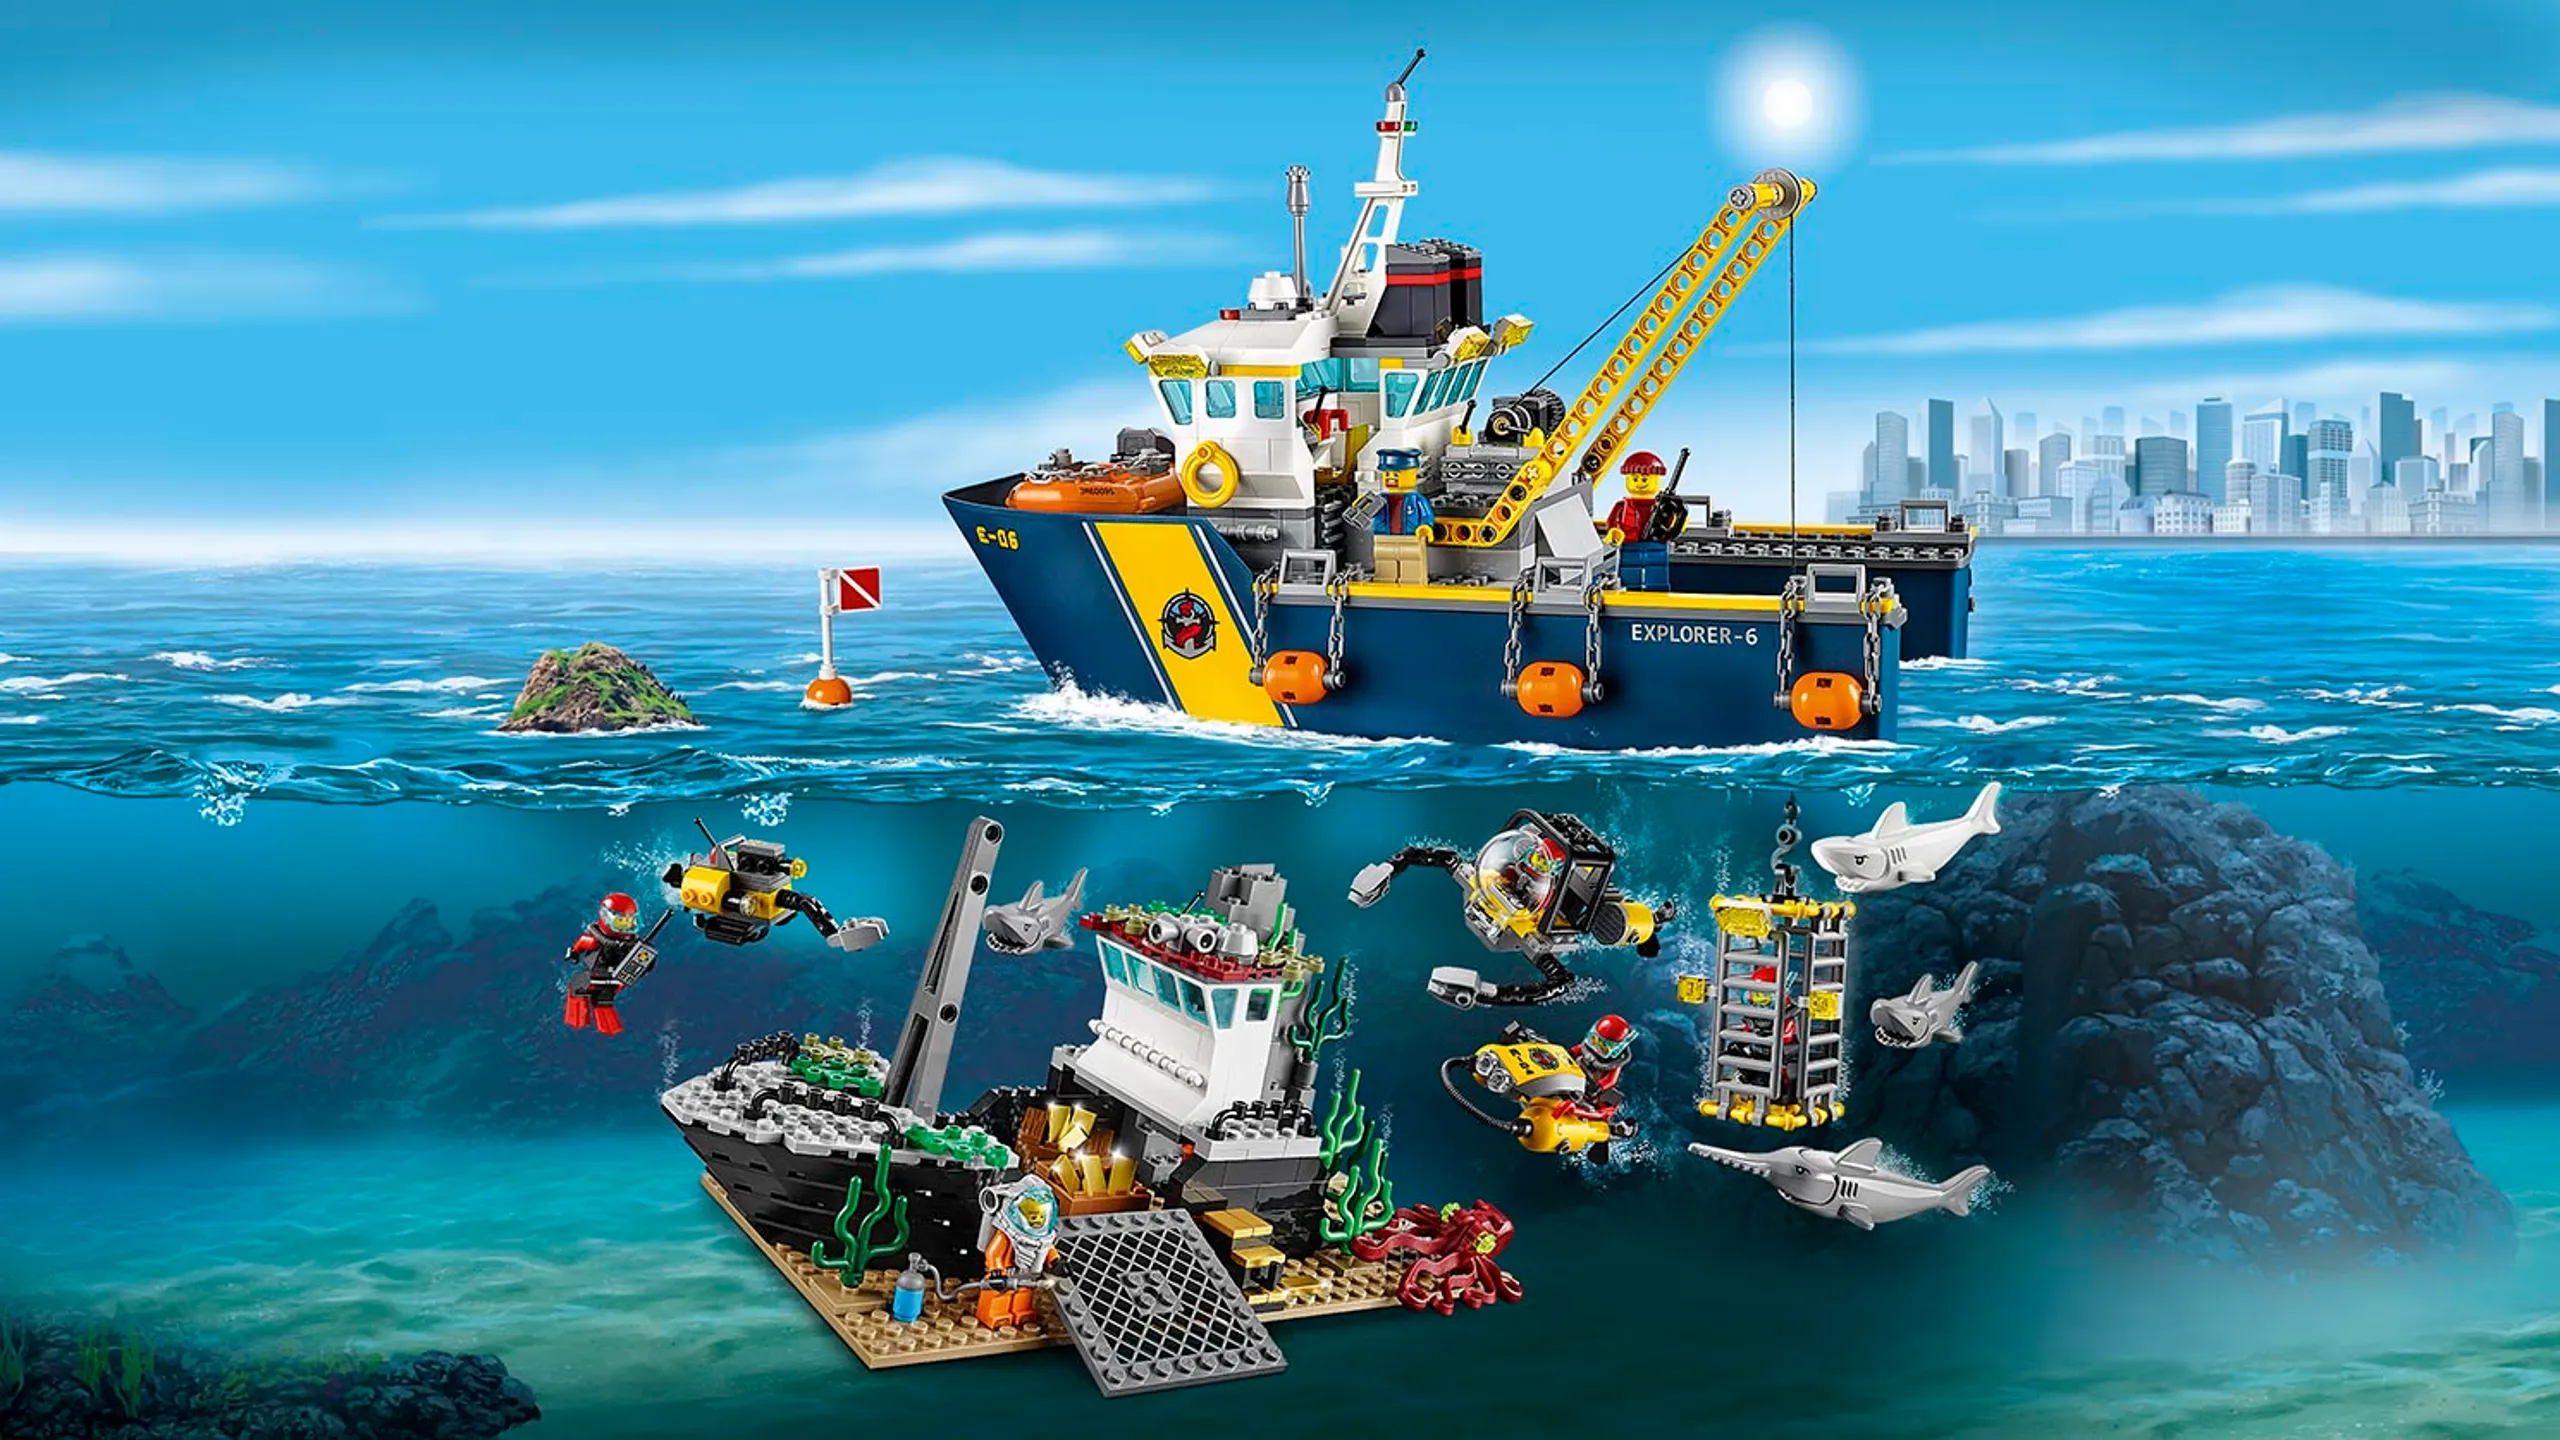 LEGO City exploration adventure at sea - Deep Sea Exploration Vessel 60095